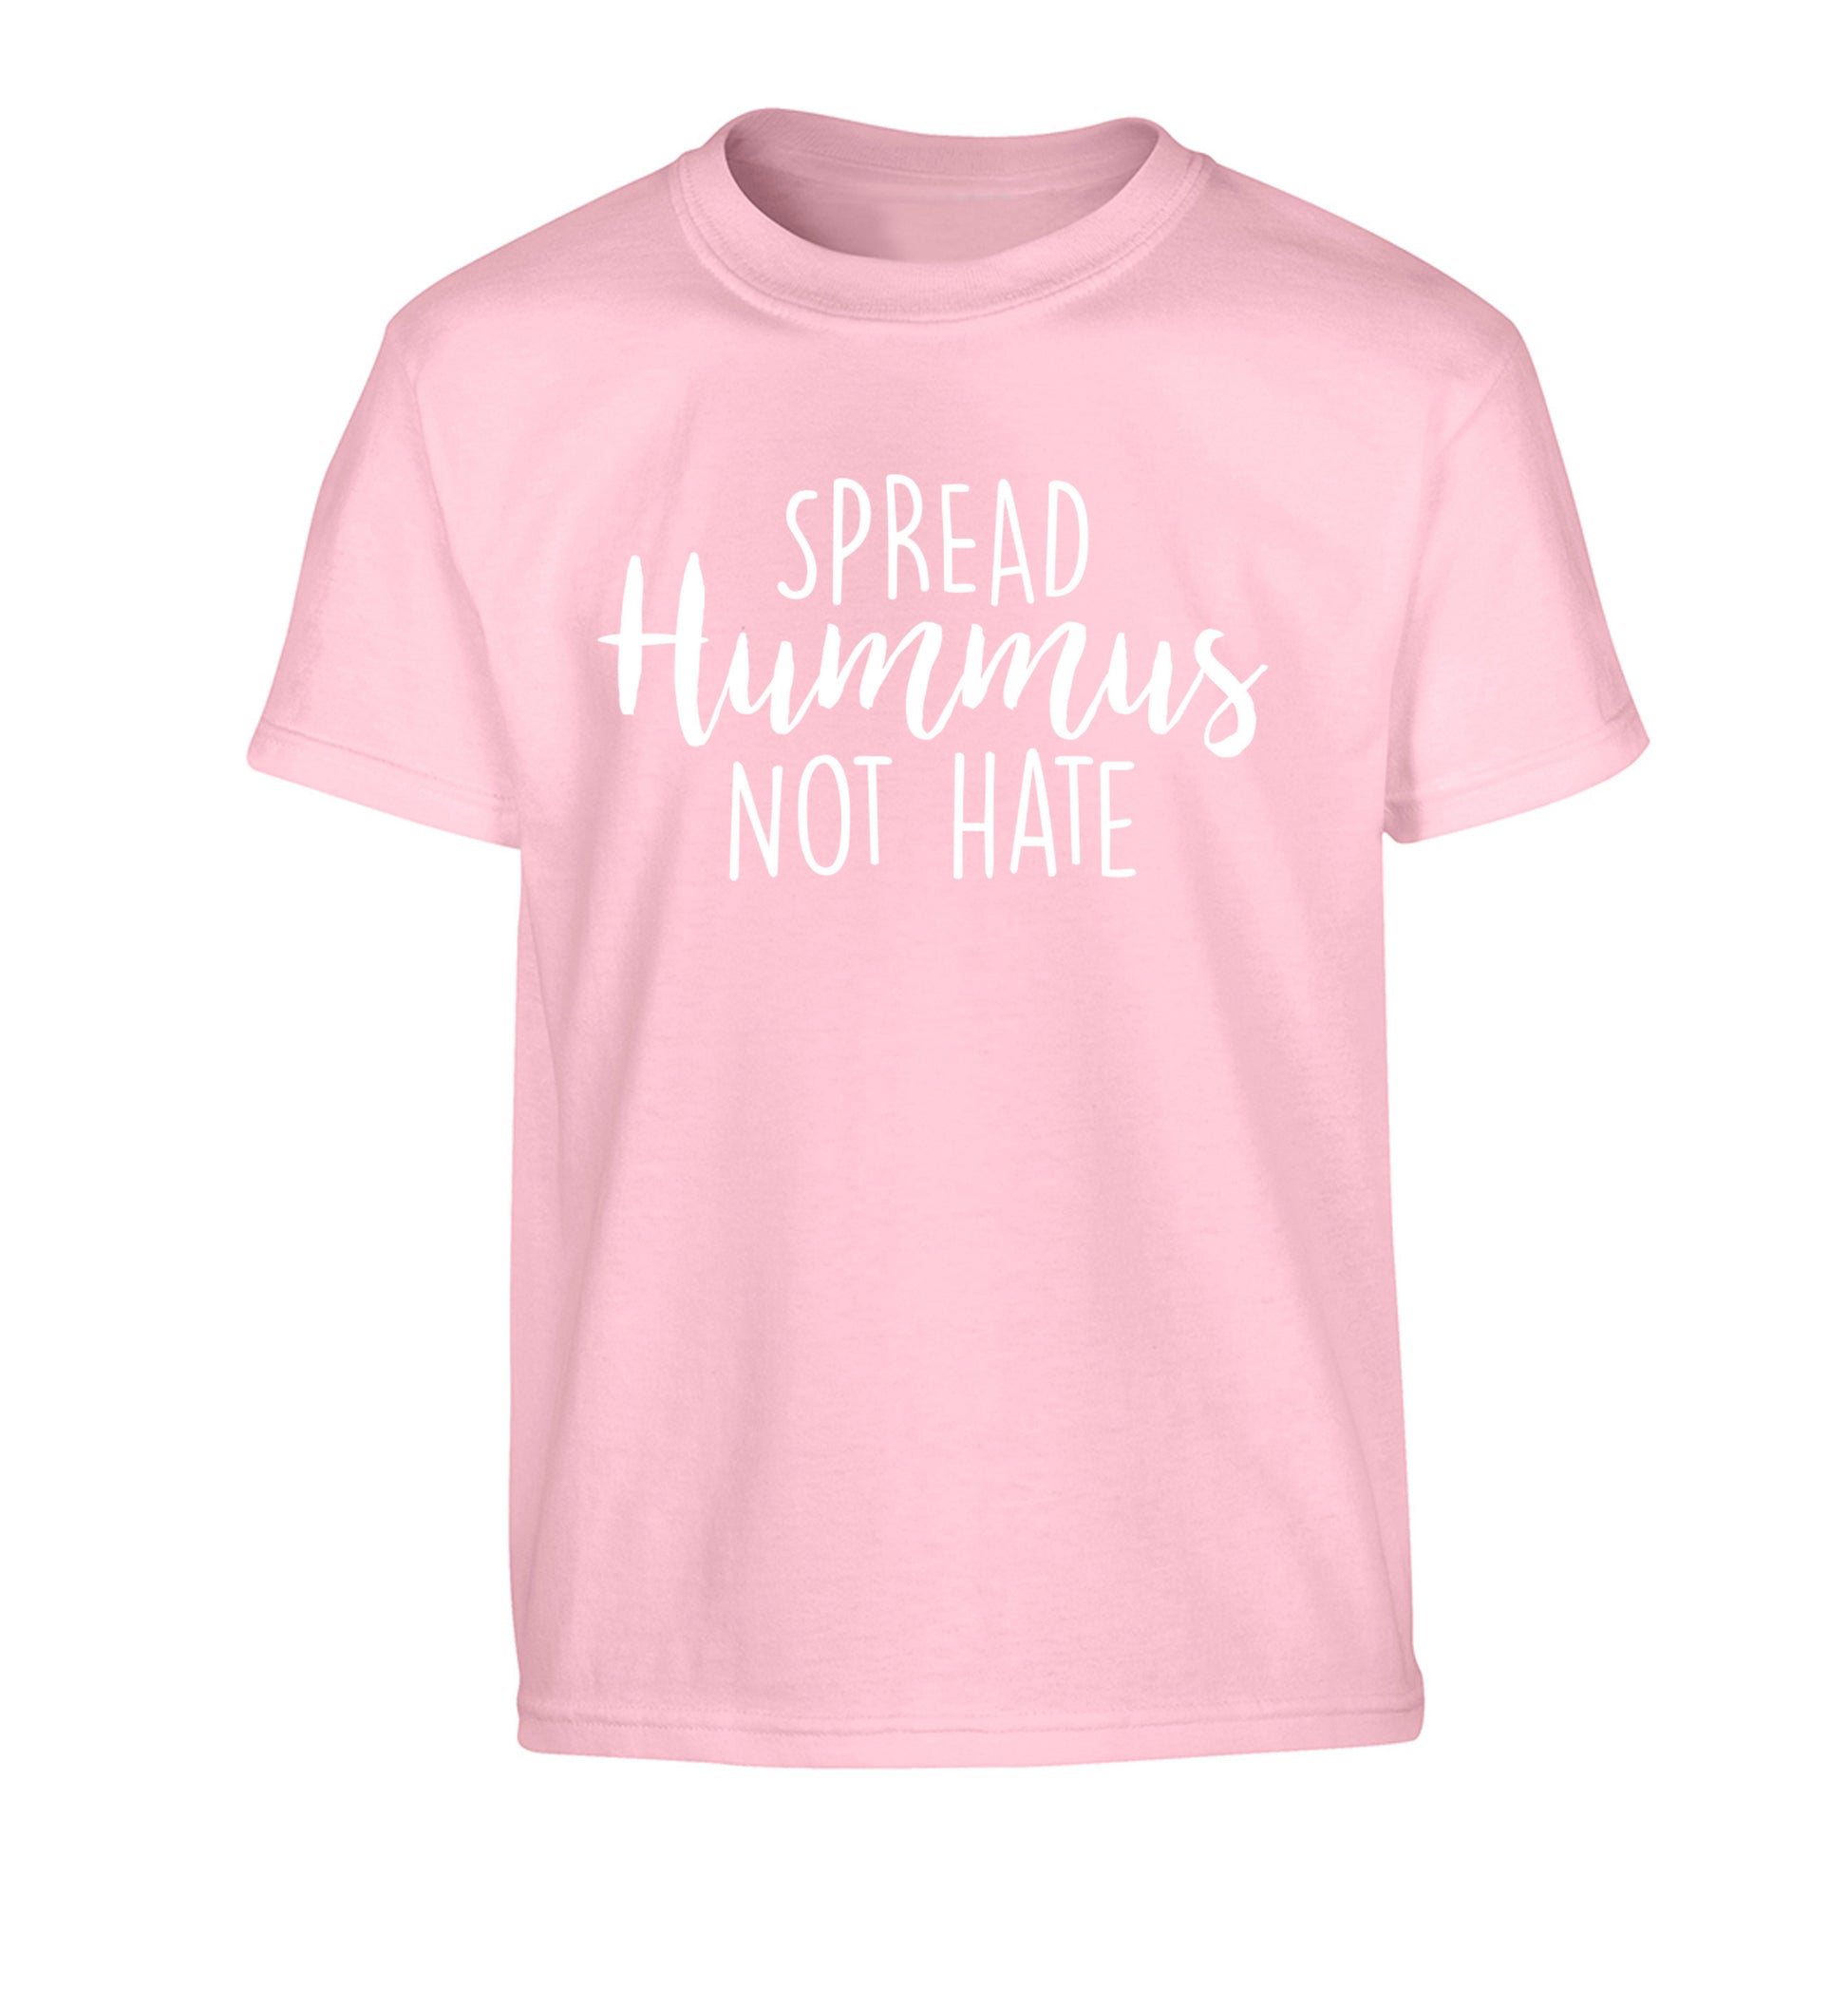 Spread hummus not hate script text Children's light pink Tshirt 12-14 Years